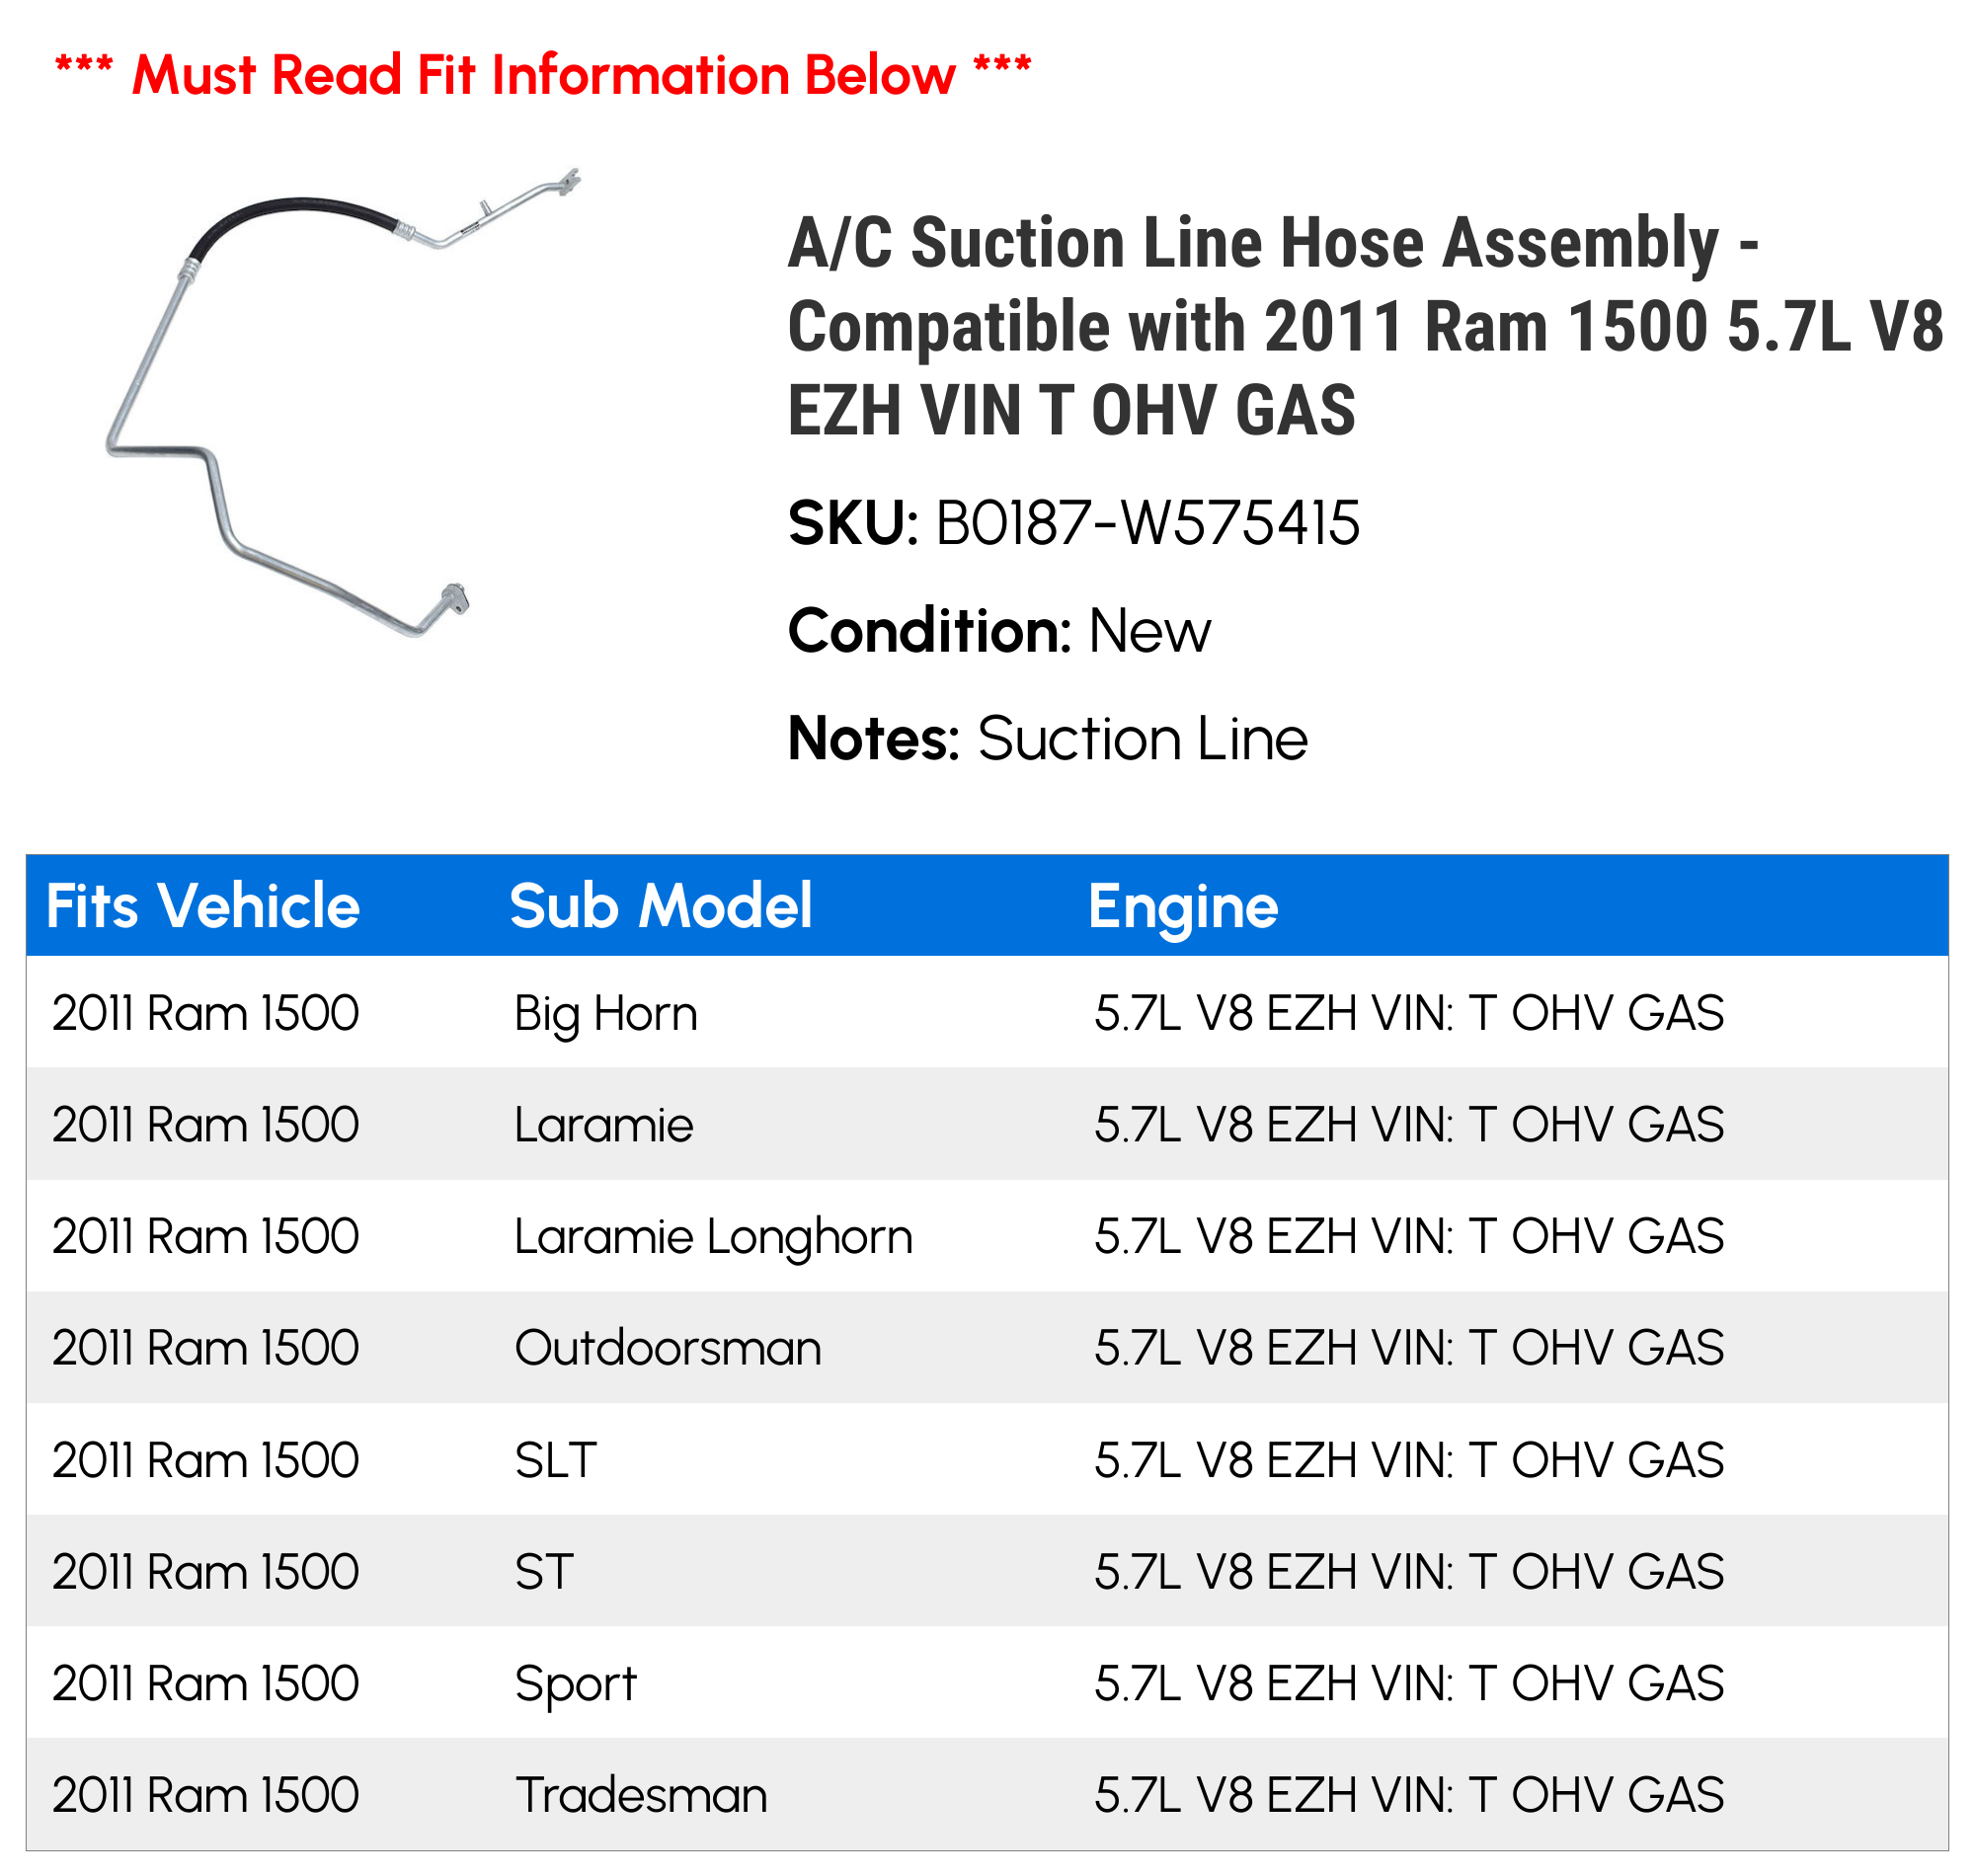 A/C Suction Line Hose Assembly - Compatible with 2011 Ram 1500 5.7L V8 EZH VIN T OHV GAS - image 2 of 2